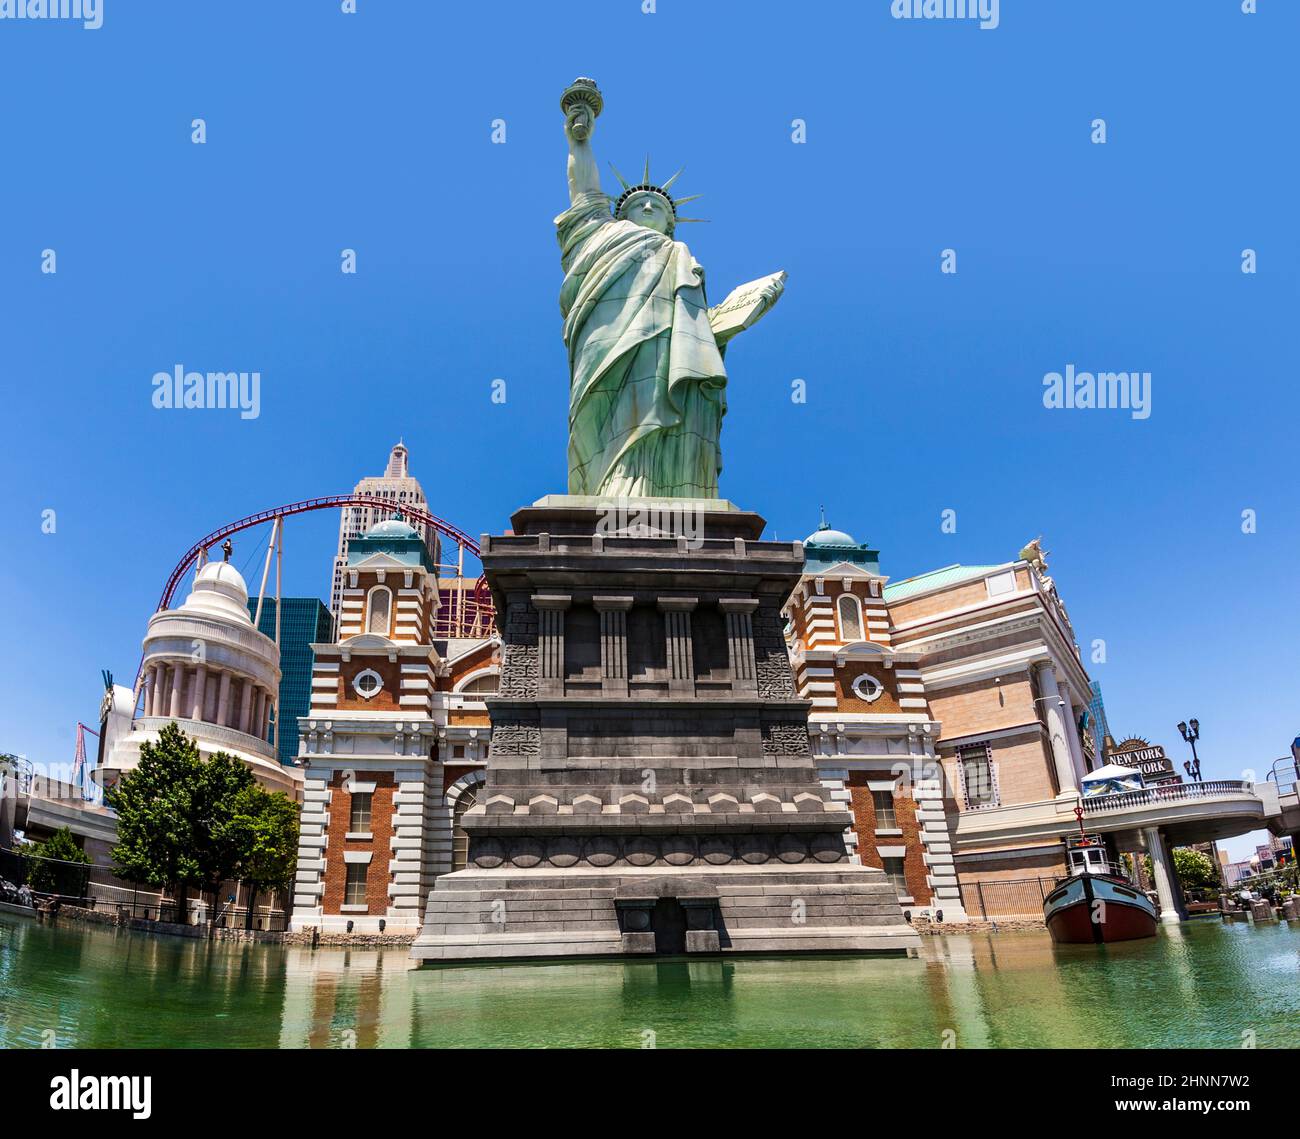 New York Hotel and Casino en Las Vegas, con réplica de la Estatua de la Libertad Foto de stock